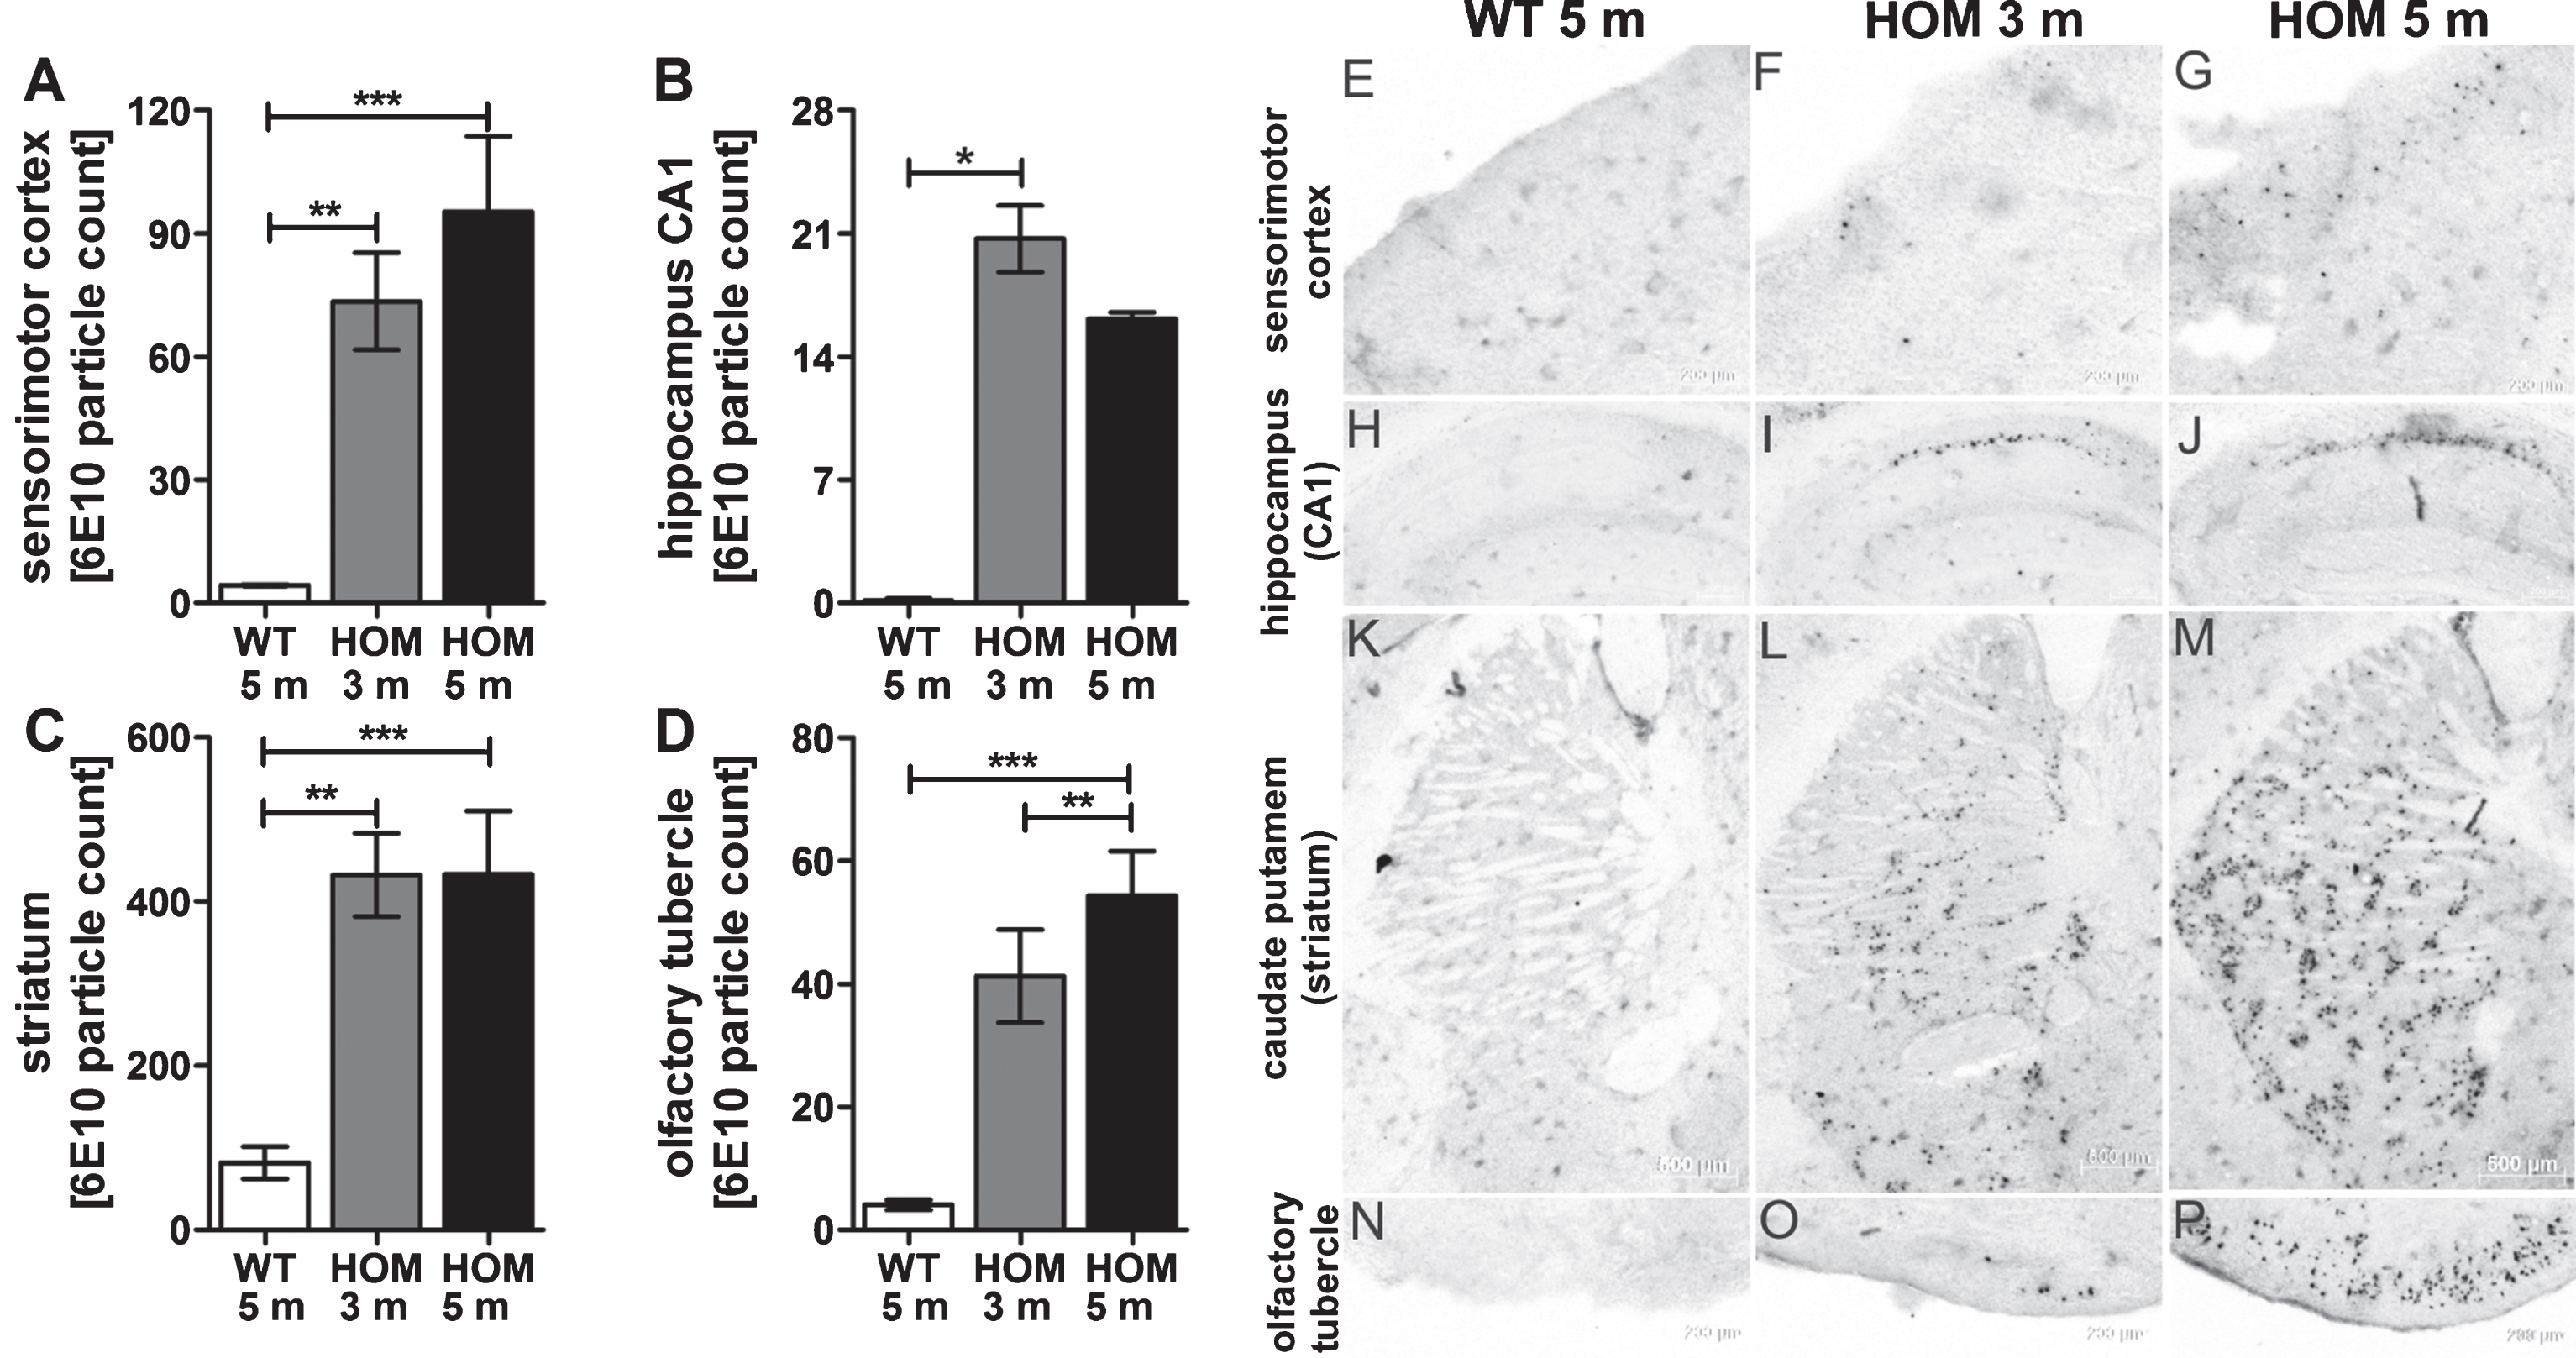 Aβ aggregates in wild type (WT), and 3 and 5 months old homozygous (HOM) TBA2.1 mice. Aβ particles were visualized by 6E10 staining in wild type (WT), and 3 and 5 months old homozygous (HOM) TBA2.1 mice. Aβ particles were quantified in different brain regions (A, N-P: olfactory tubercle, B, K-M: caudate putamen (striatum), C, E-G: sensorimotor area (cortex), D, H-J: CA1 region (hippocampus)). Data is presented as mean±SEM; *p < 0.05, **p < 0.01, and ***p < 0.001.